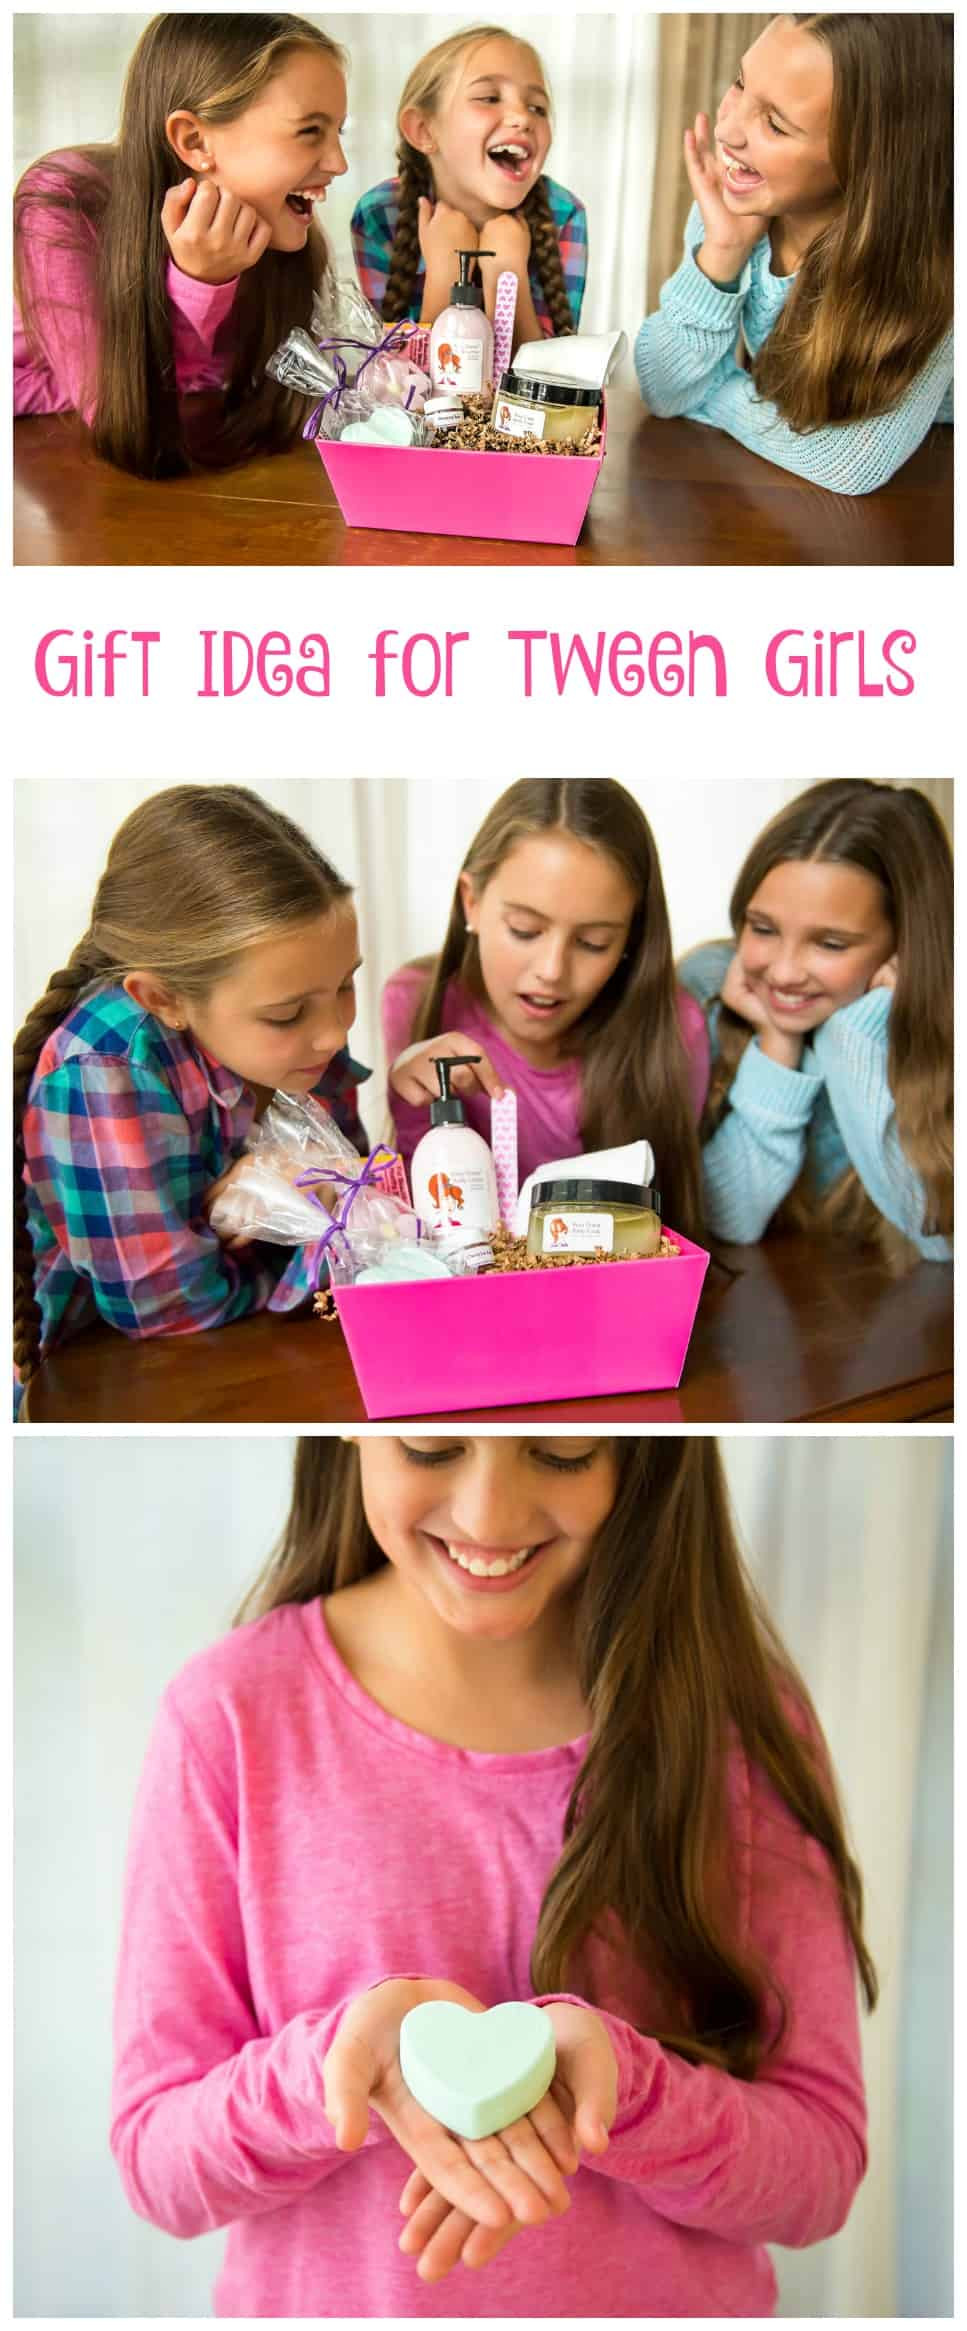 DIY Gifts For Tweens
 Fun Gift Idea for Tween Girls DIY Spa Kits 5 Minutes